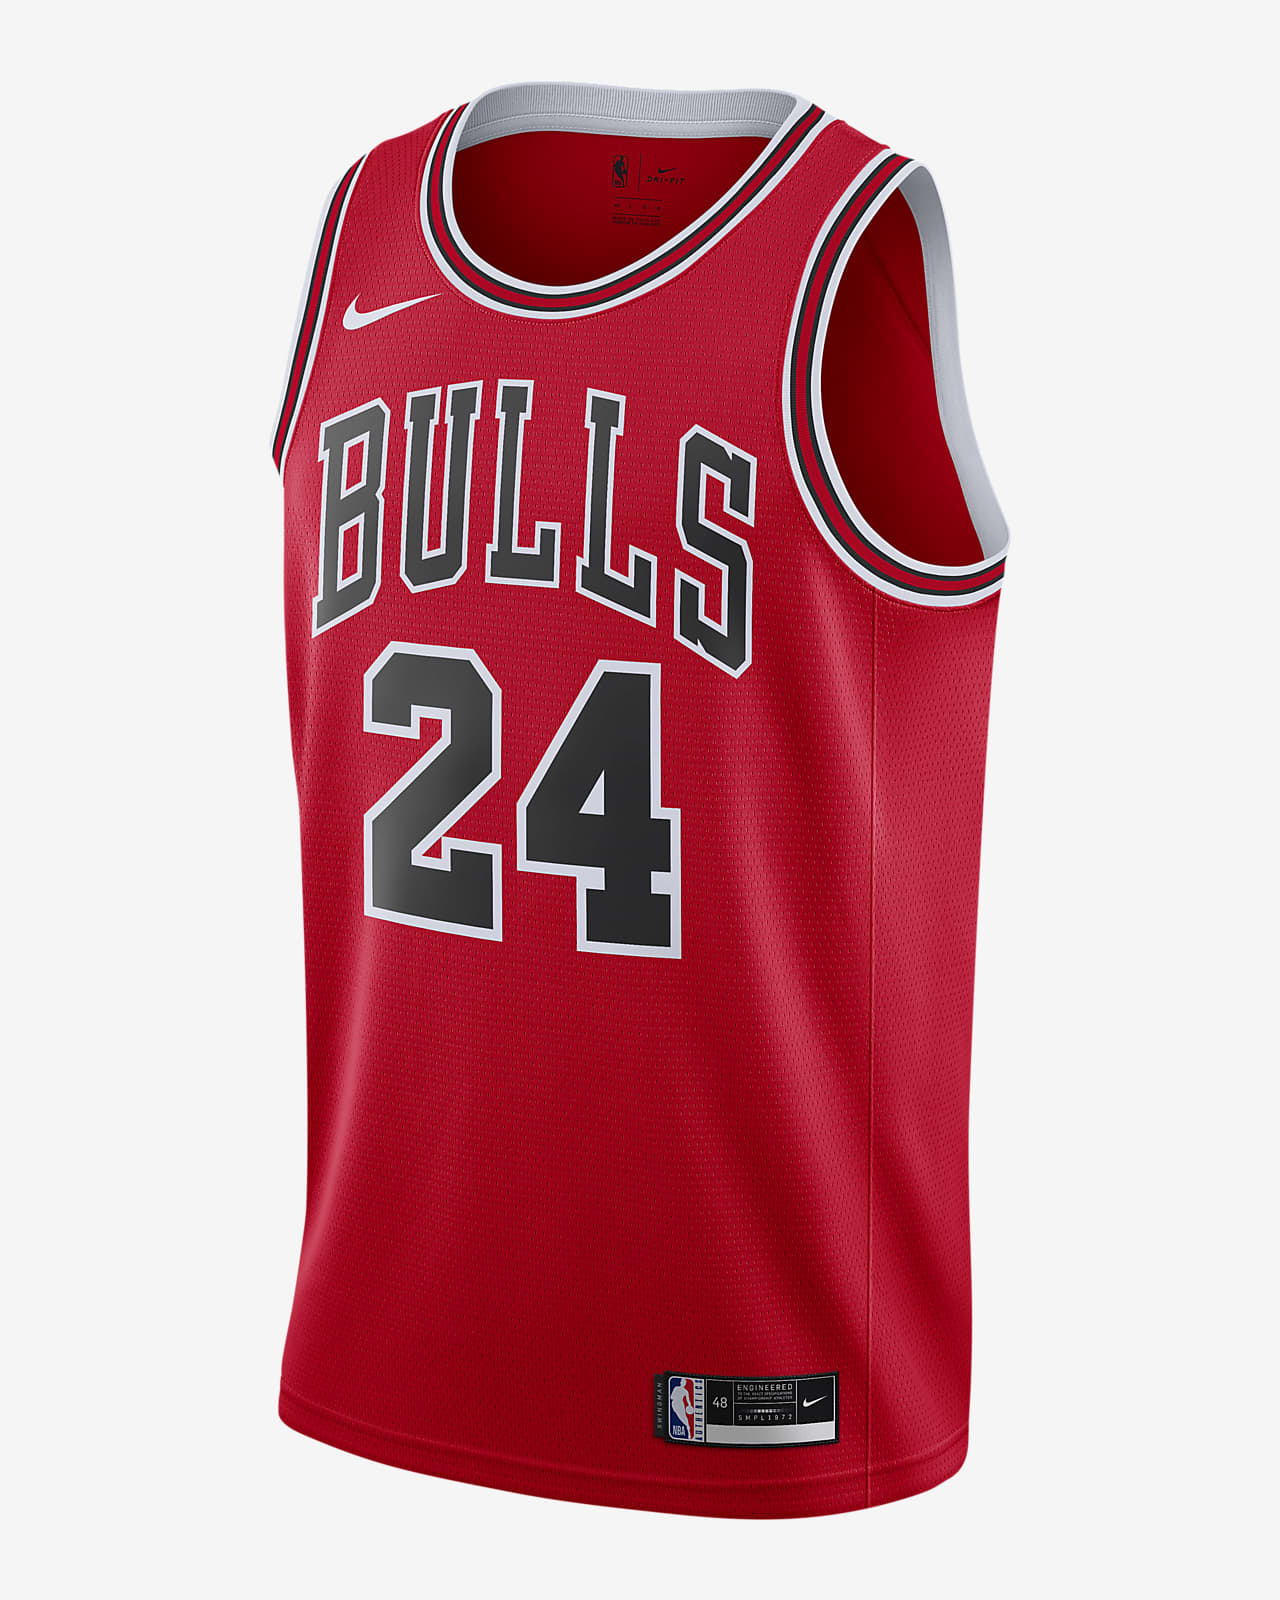 Chicago Bulls - Fanatics Lauri Markkanen #24 basketball jersey